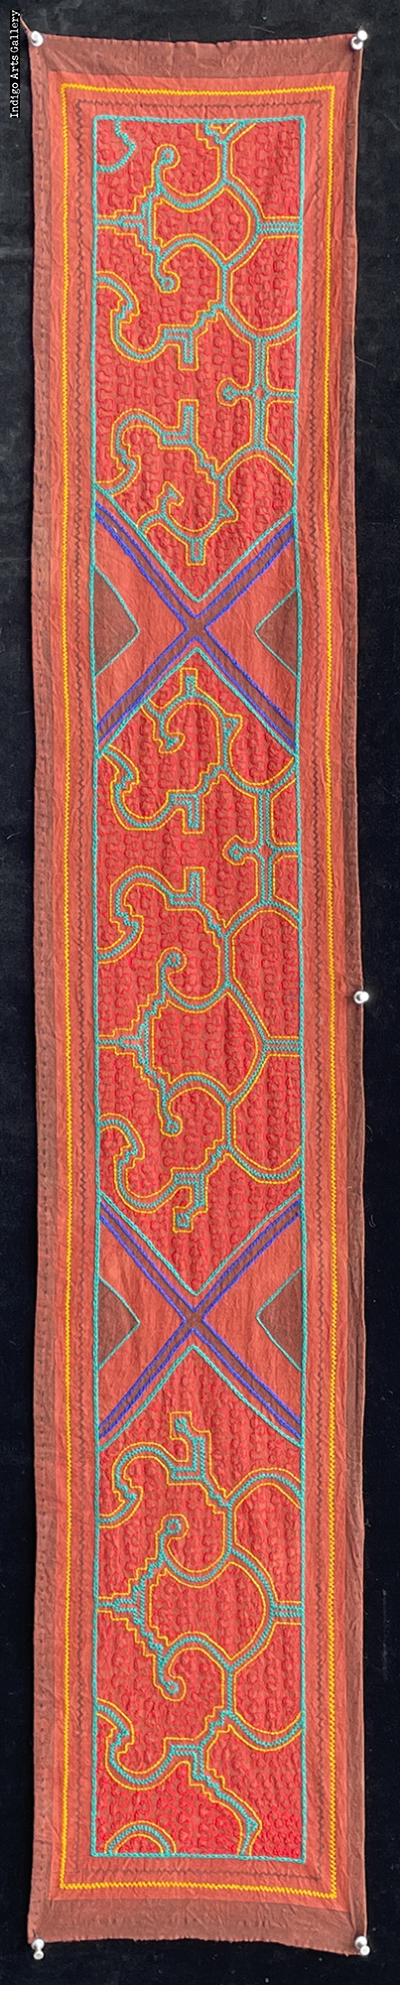 Shipibo Textiles from the Amazon of Peru | Indigo Arts